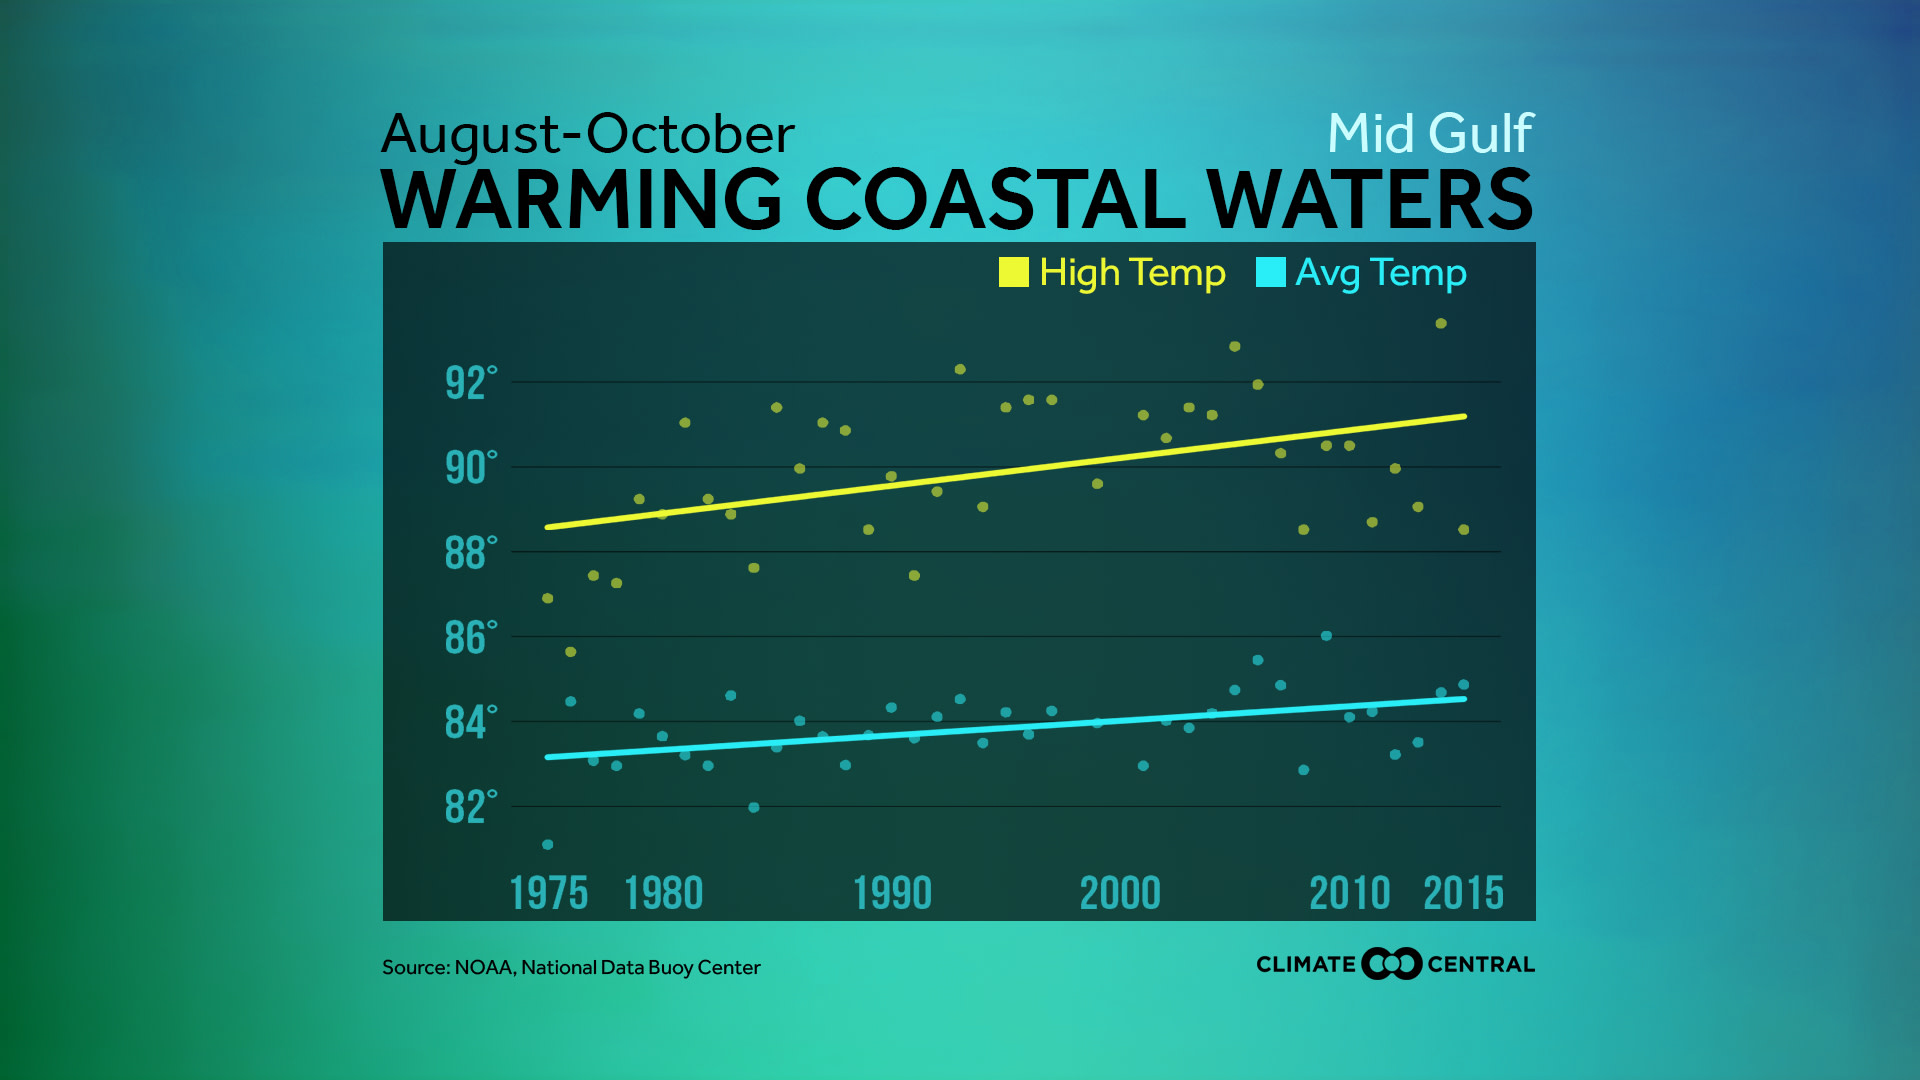 Set 1 - U.S. Coastal Water Temperature Trends